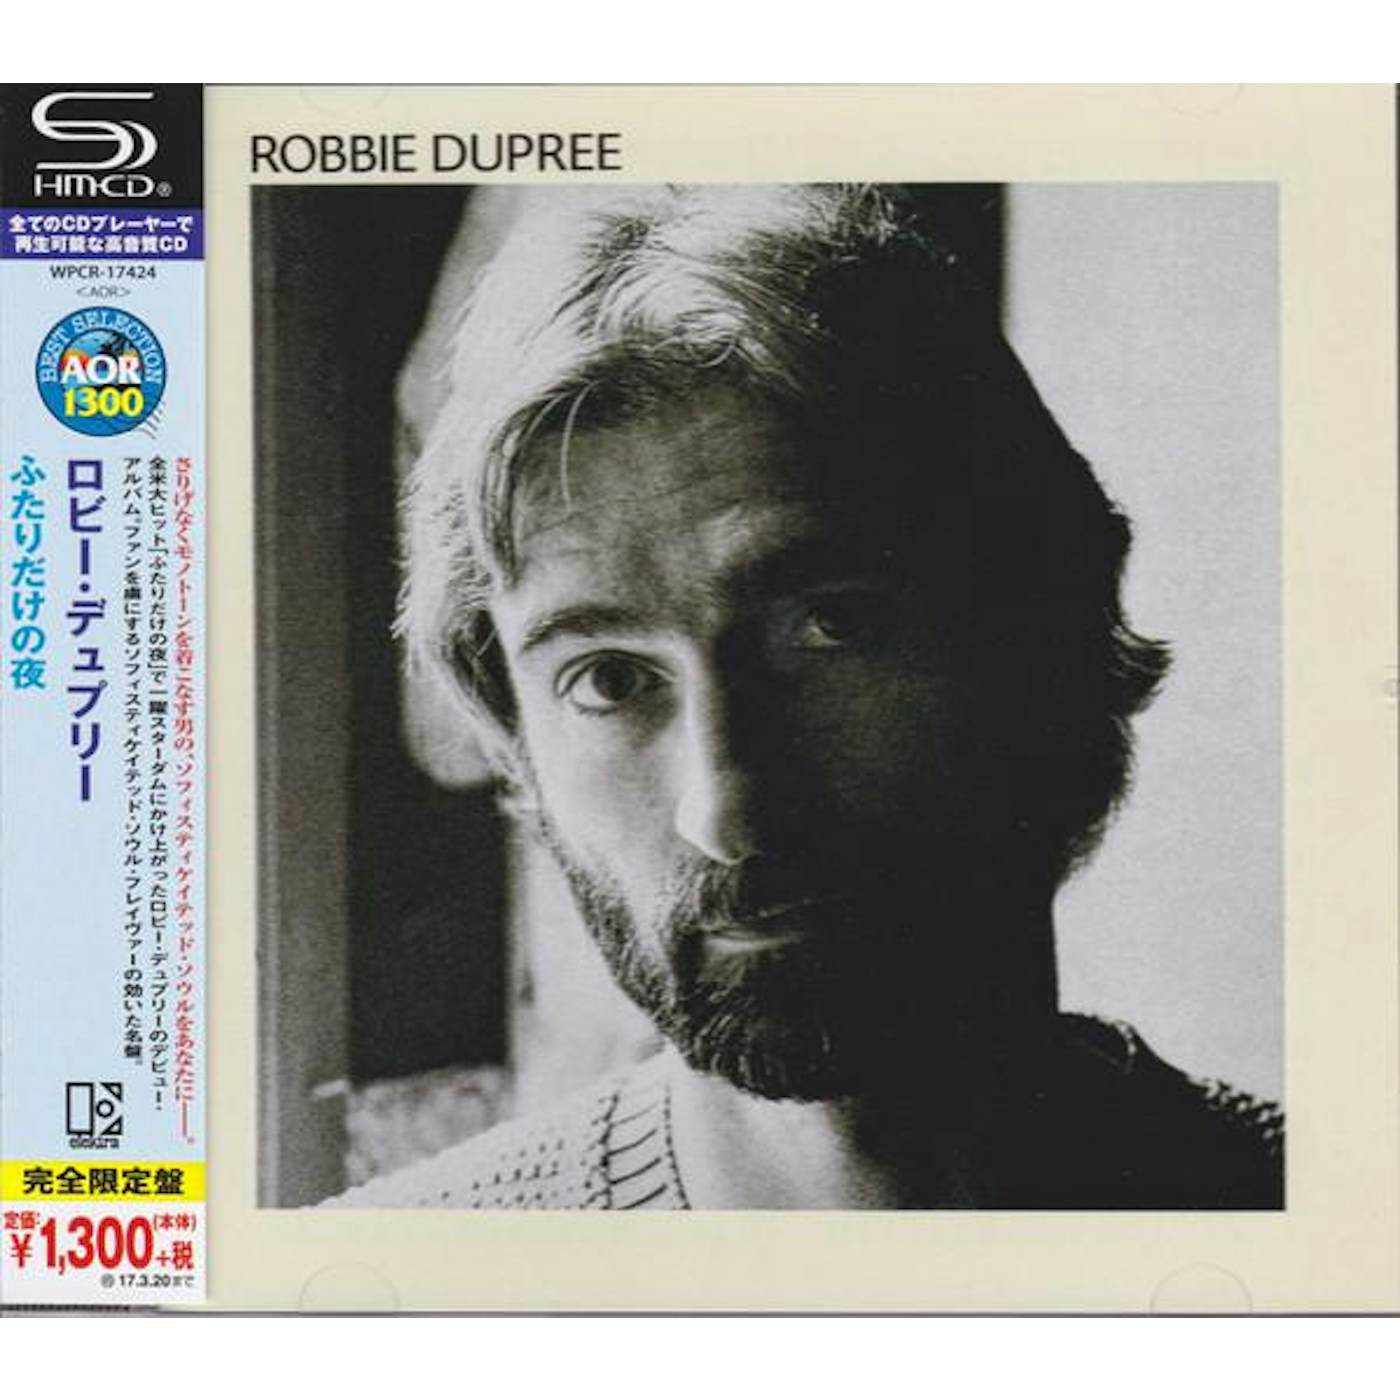 ROBBIE DUPREE (SHM) CD